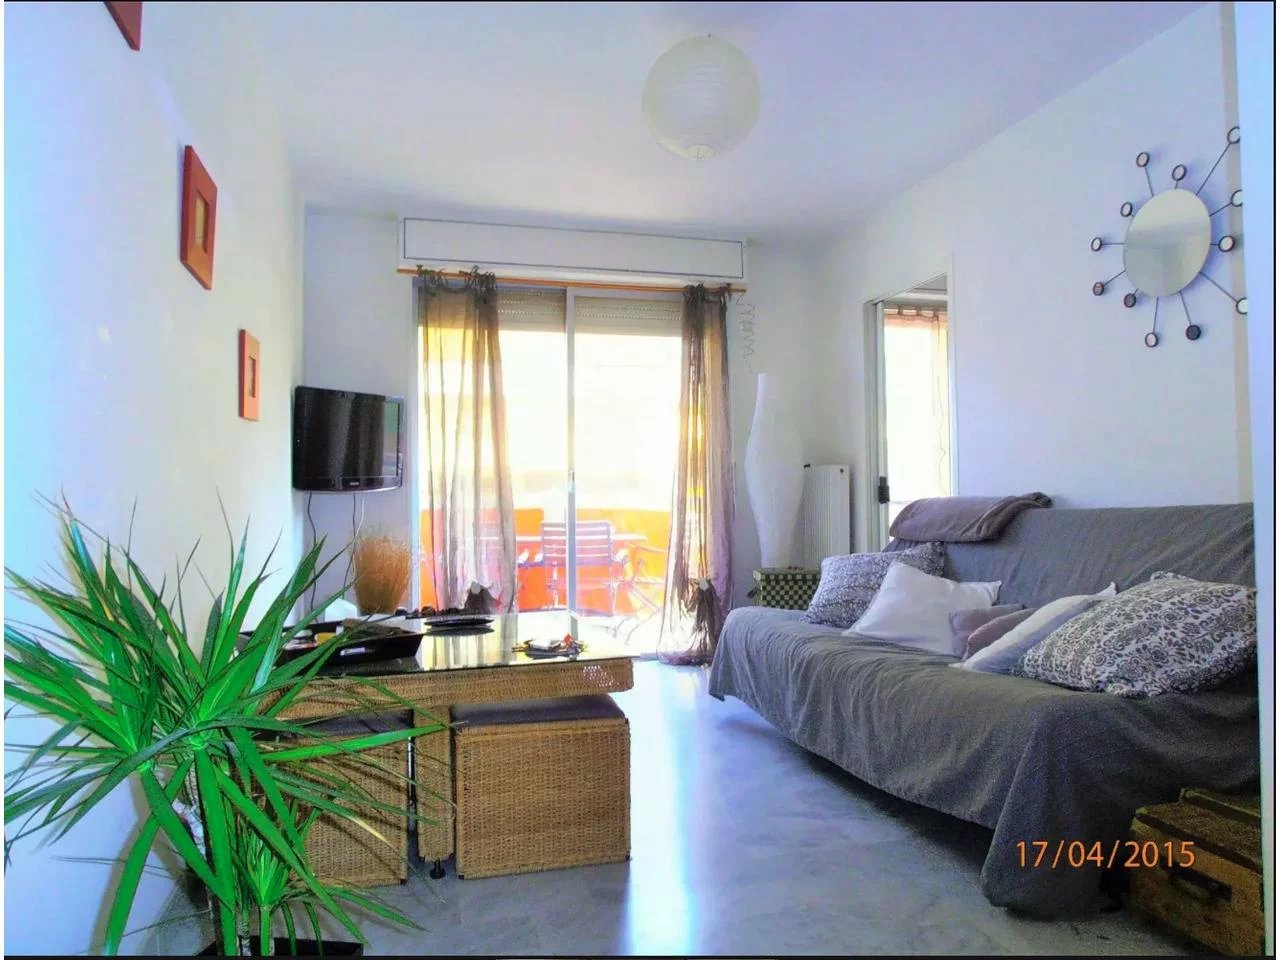 Appartement  1 Locali 31.27m2  In vendita   113 000 €